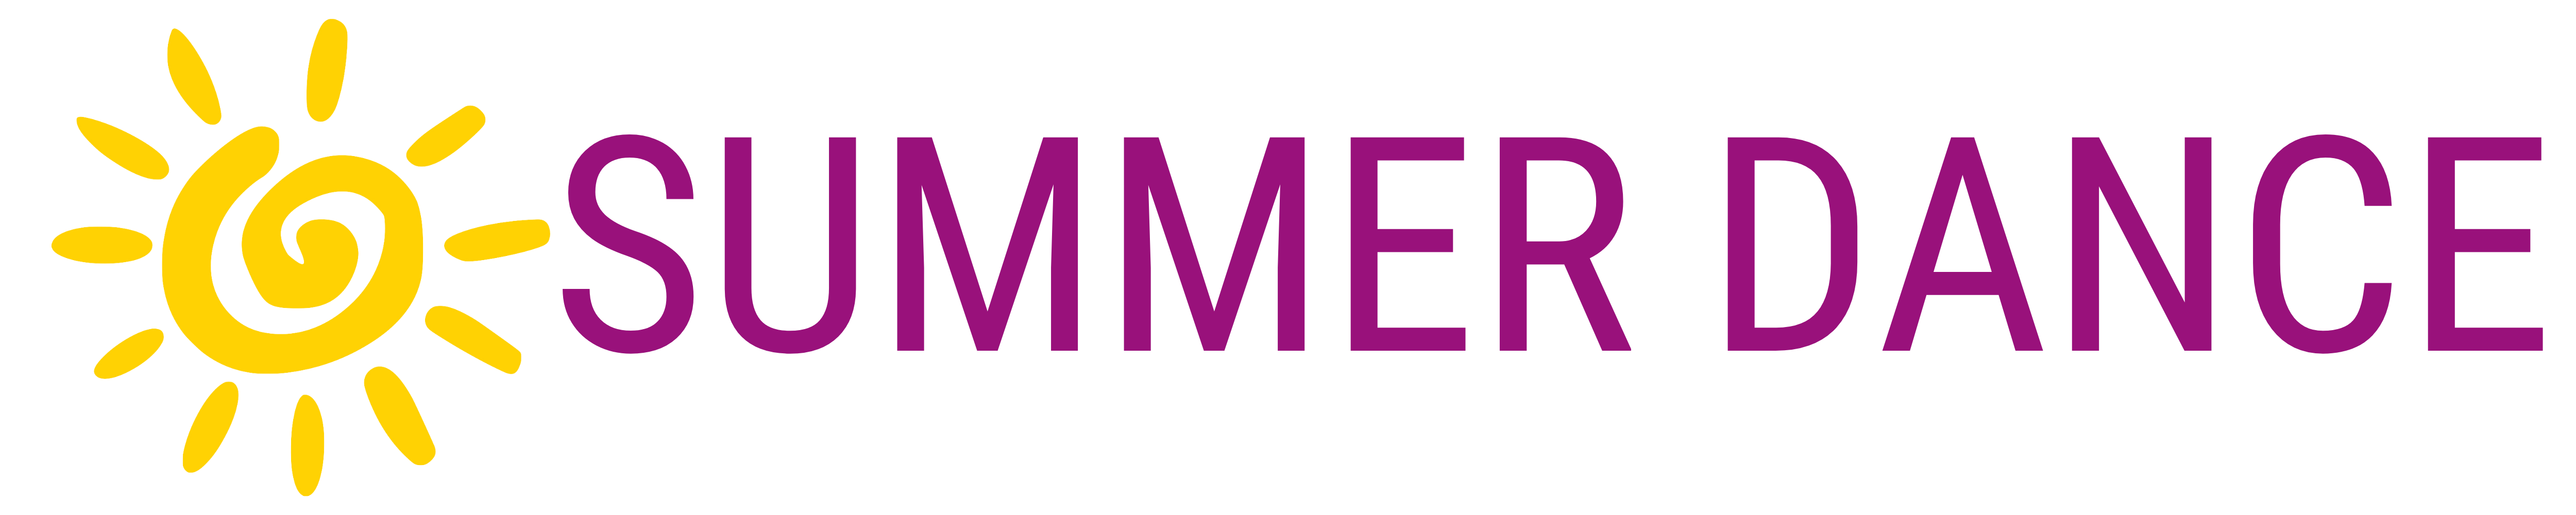 SUMMER DANCE logo